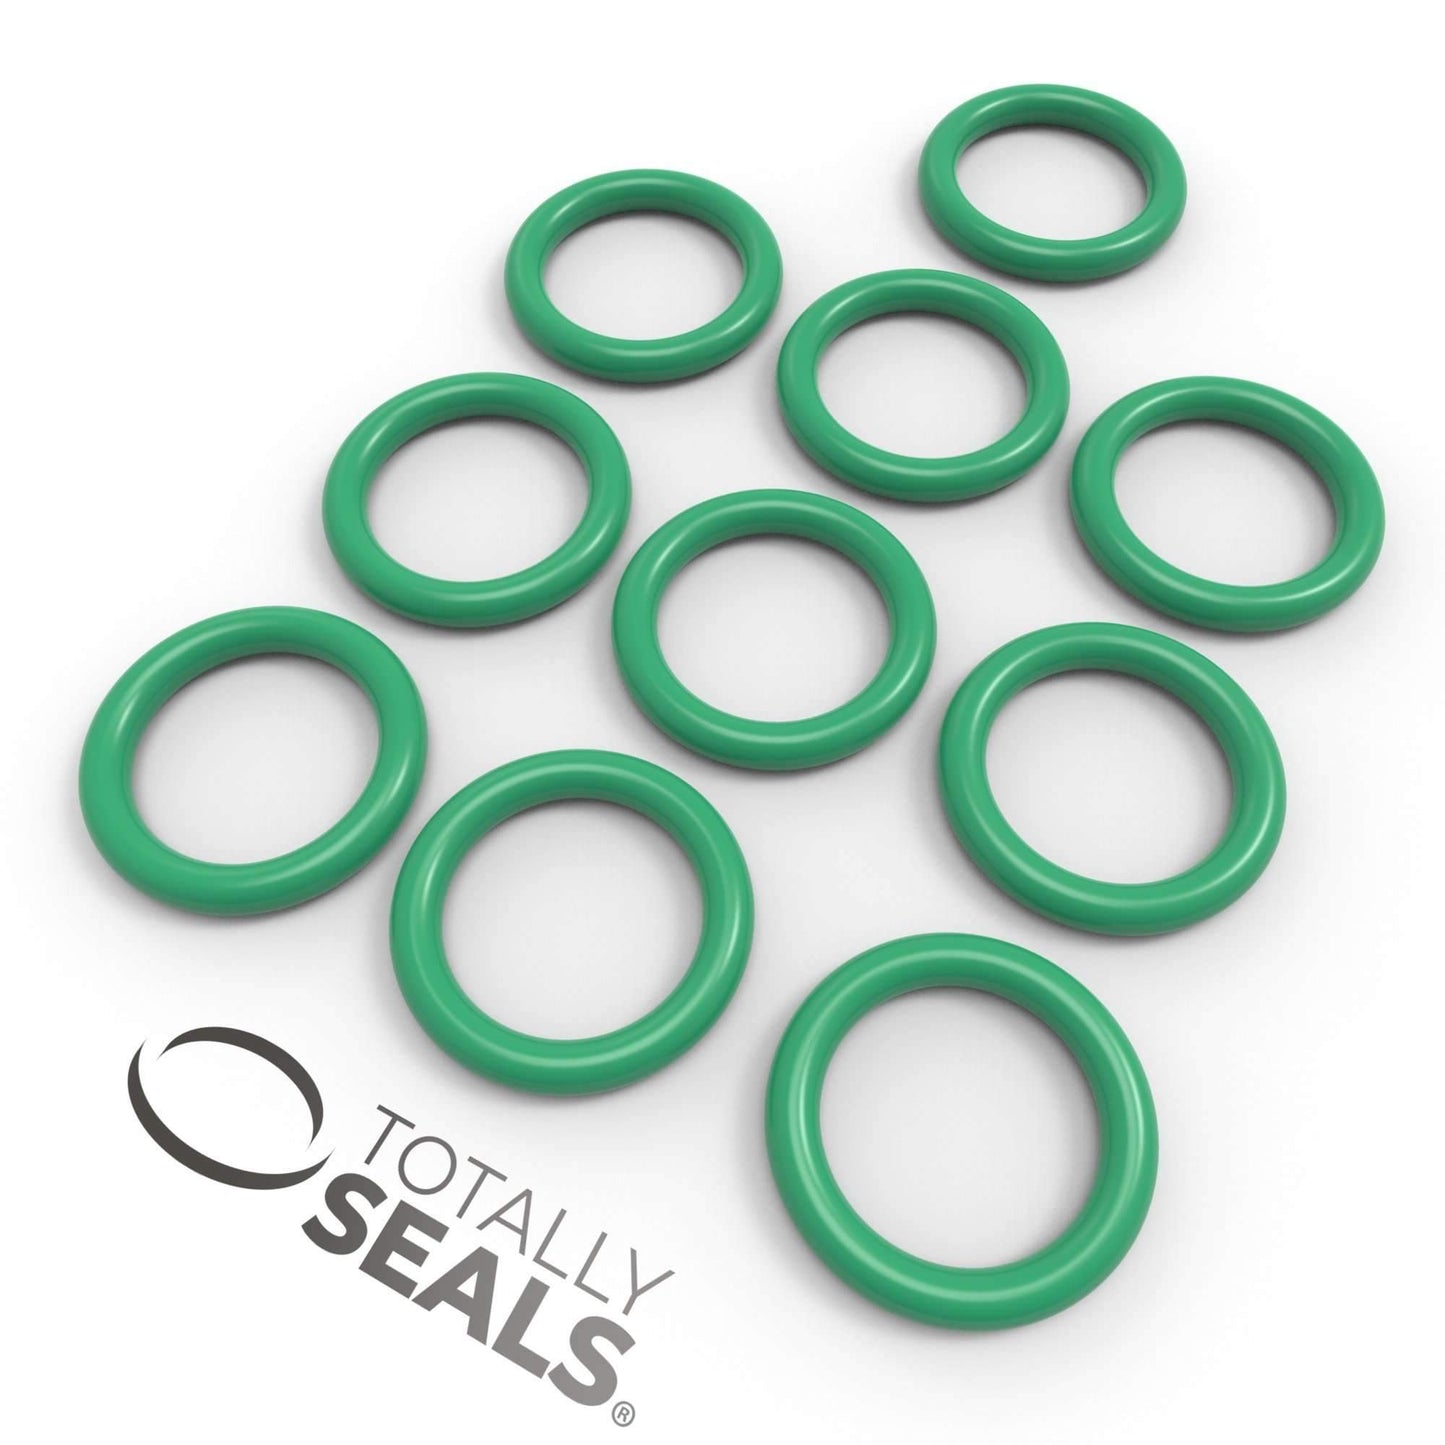 4mm x 2mm (8mm OD) FKM (Viton™) O-Rings - Totally Seals®